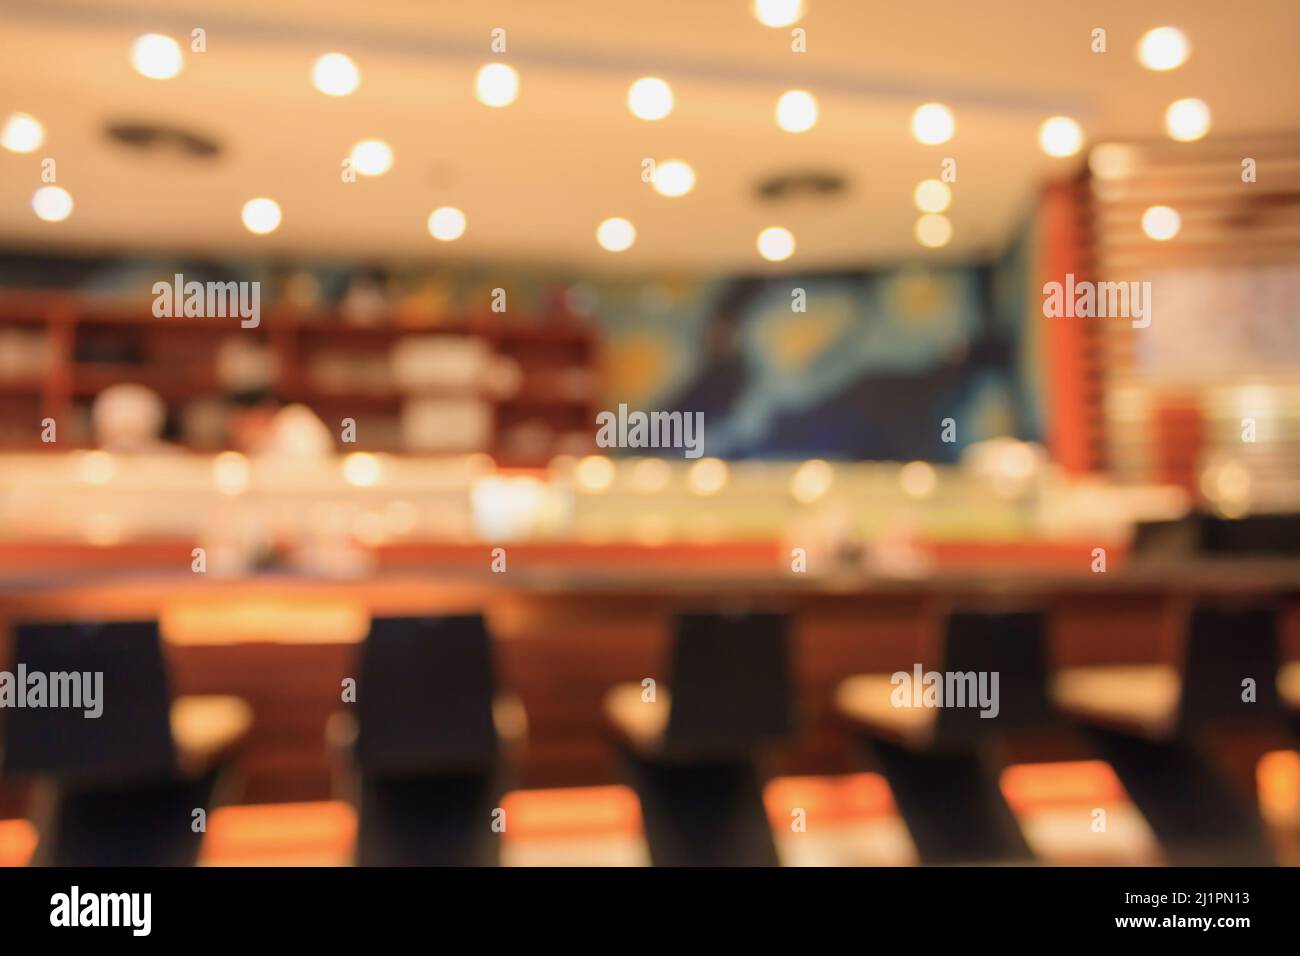 japanese restaurant interior blurred background Stock Photo